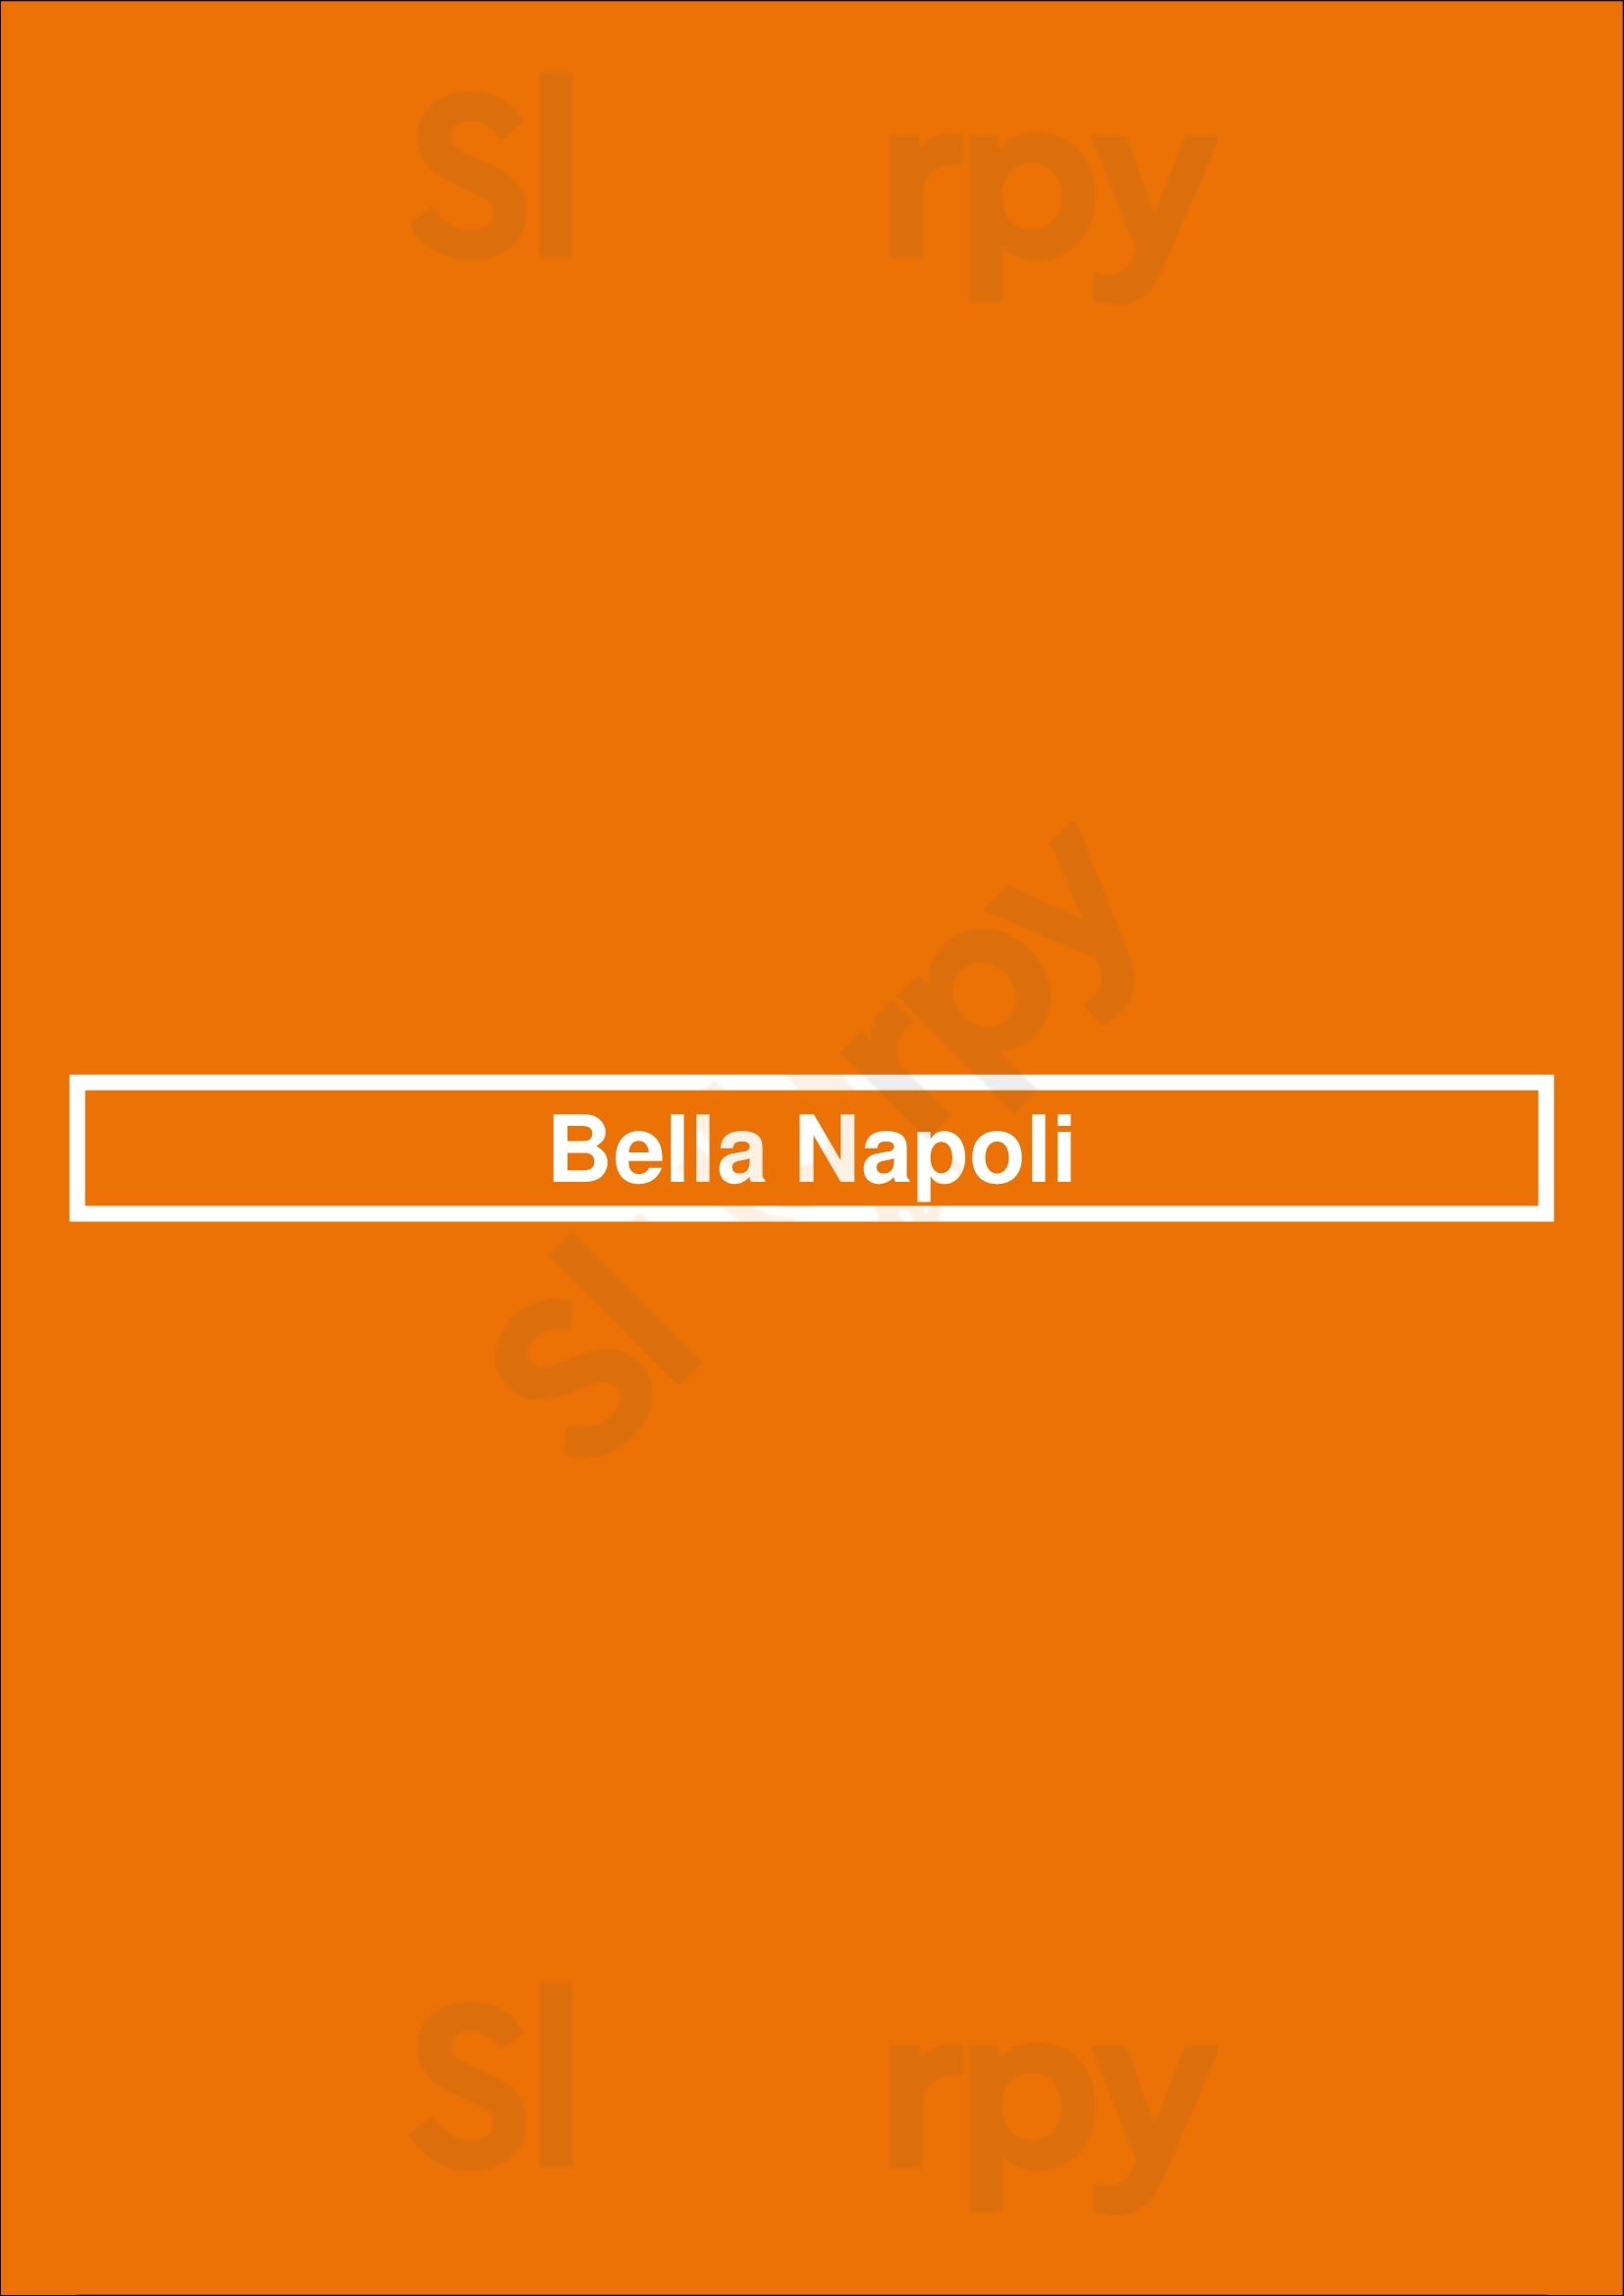 Bella Napoli New York City Menu - 1